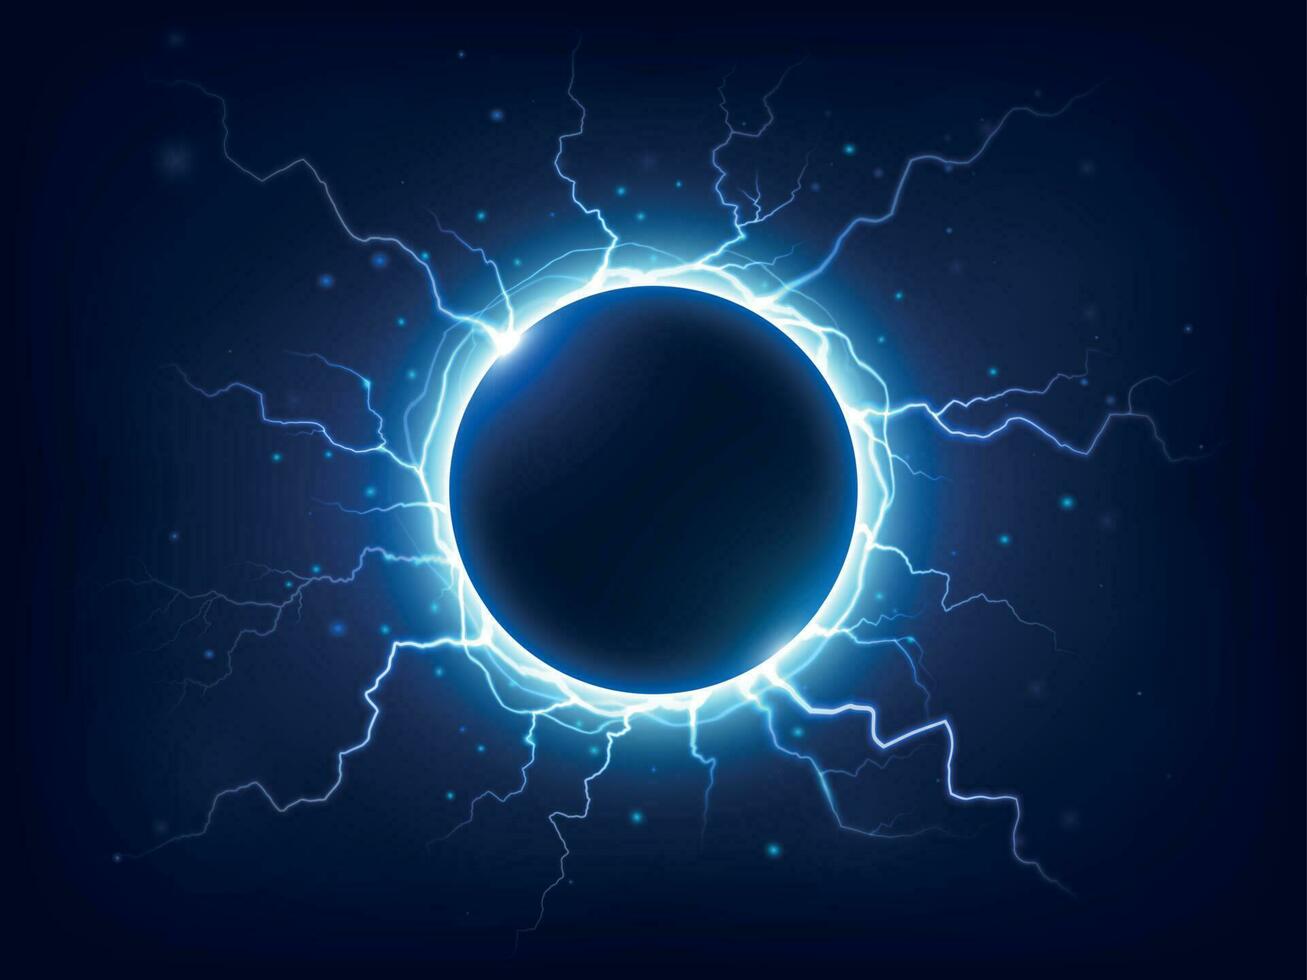 spectaculair donder en bliksem omringen blauw elektrisch bal. macht energie gebied omringd elektrisch bliksemschichten vector achtergrond